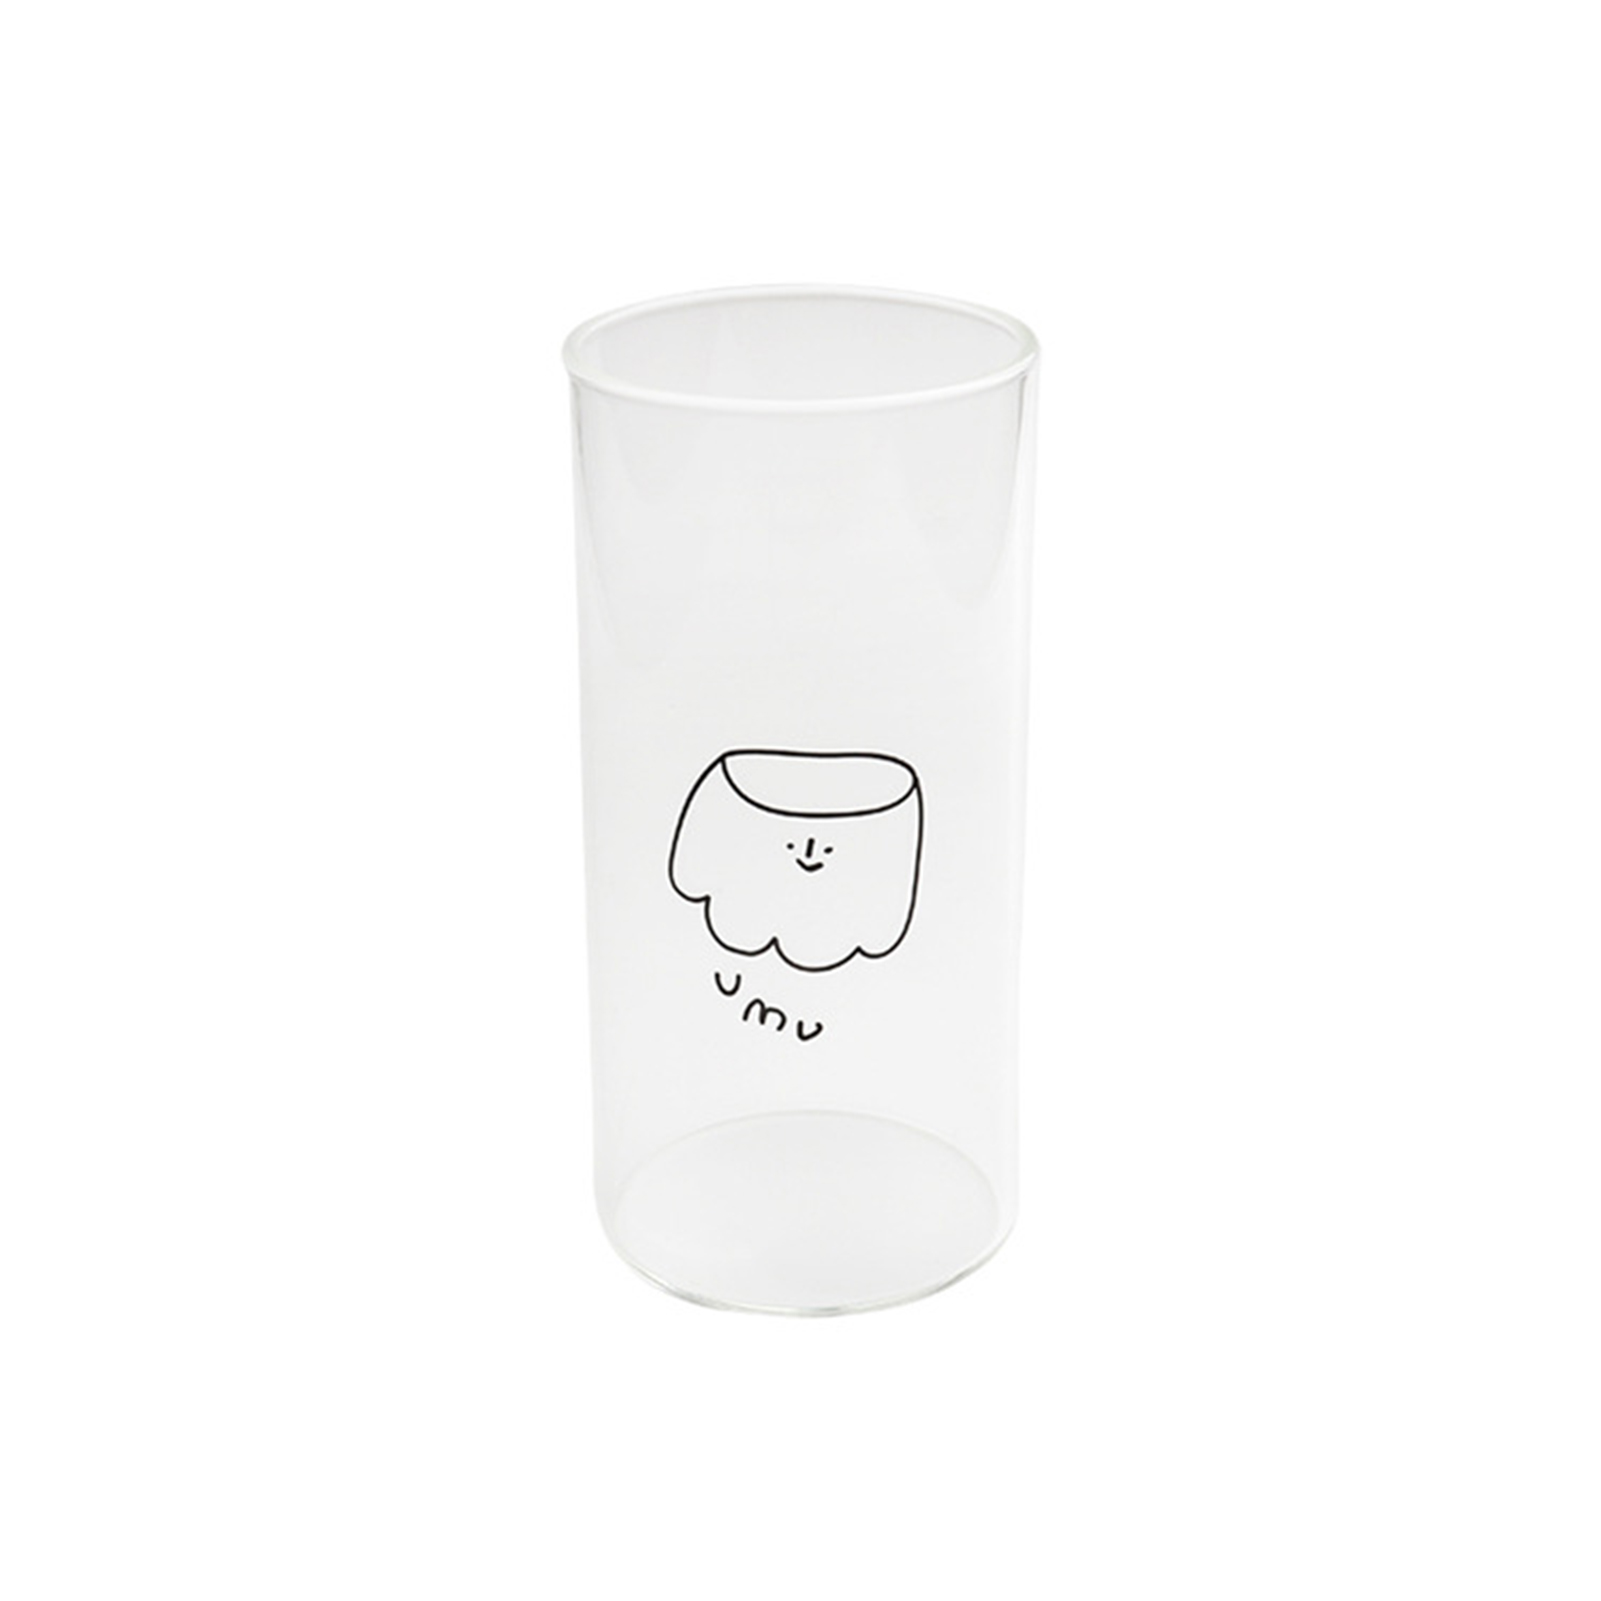 cartoon glass cup